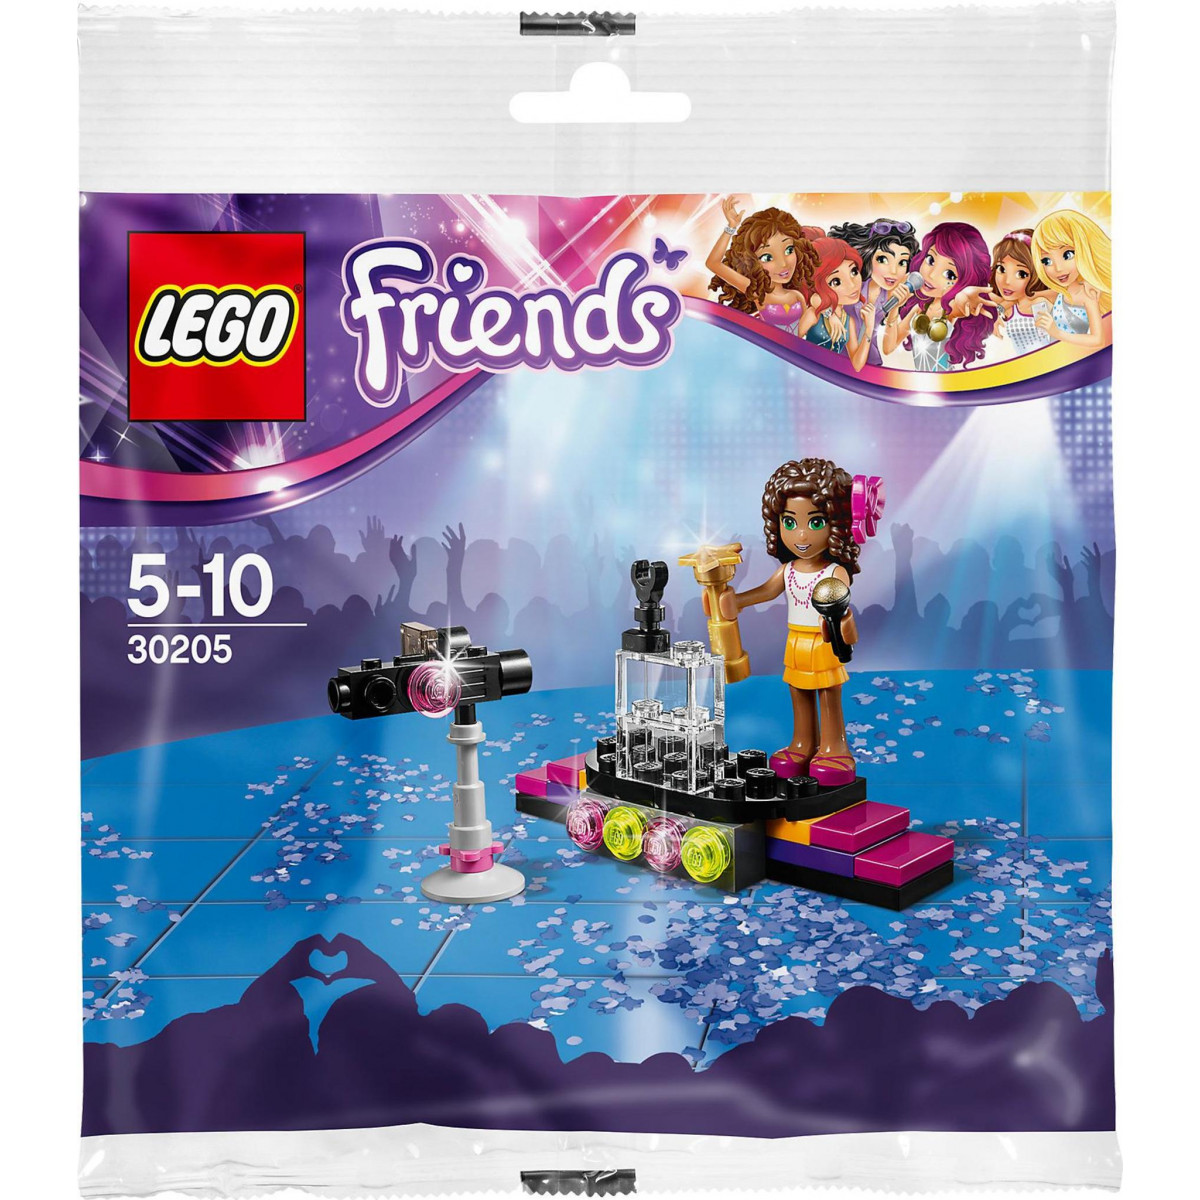 LEGO Friends 30205 - Pop Star Red Carpet polybag